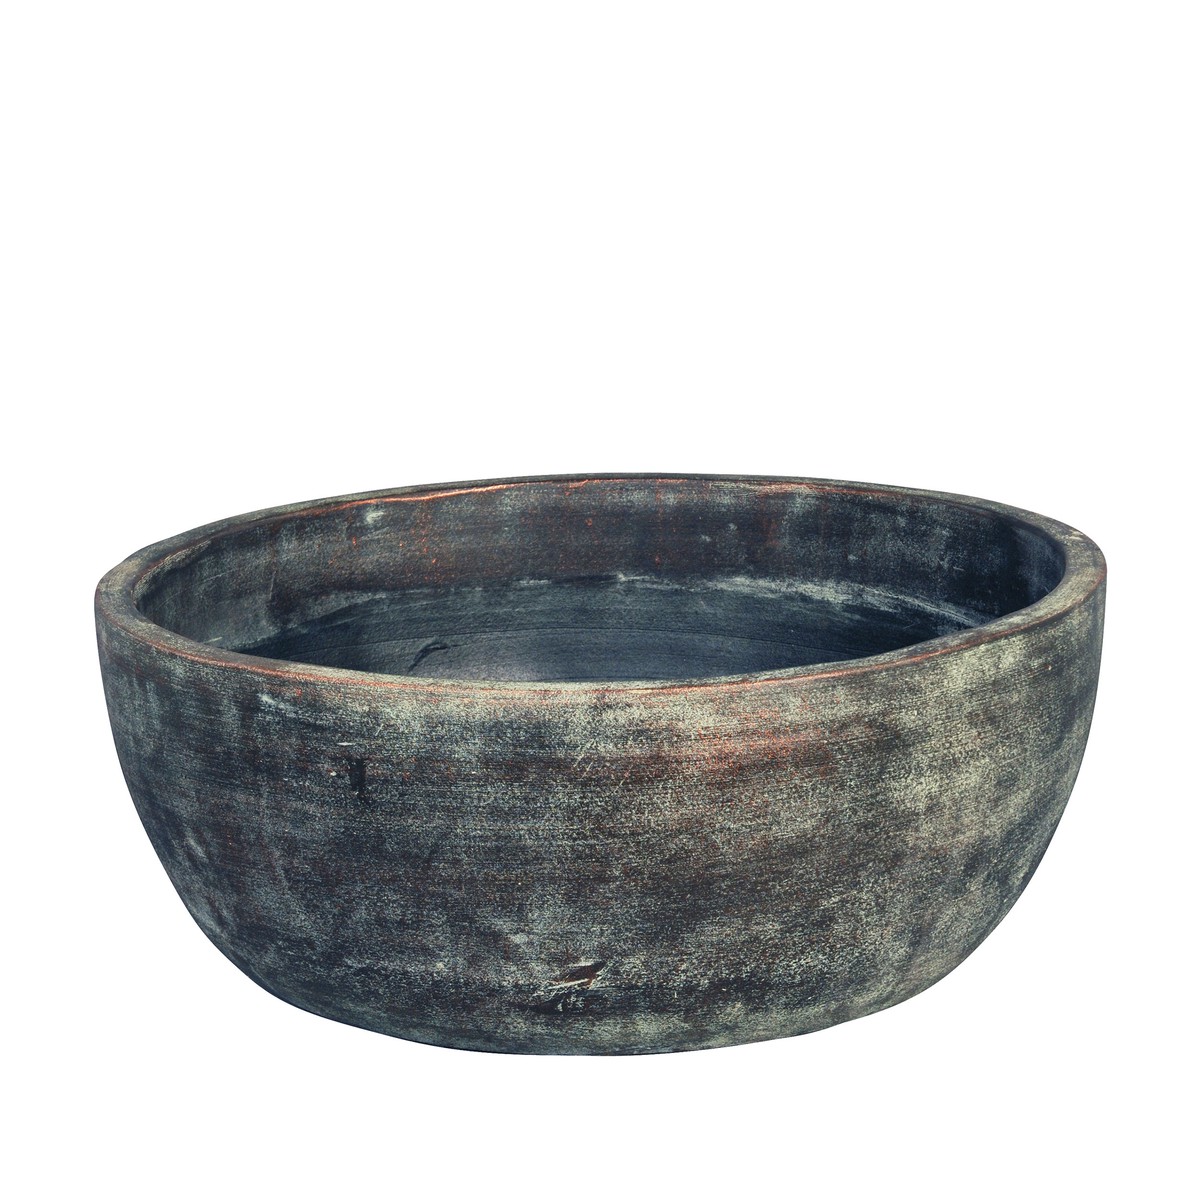   Bowl Ceramica Vietnam 45x18cm Verde  45x18cm